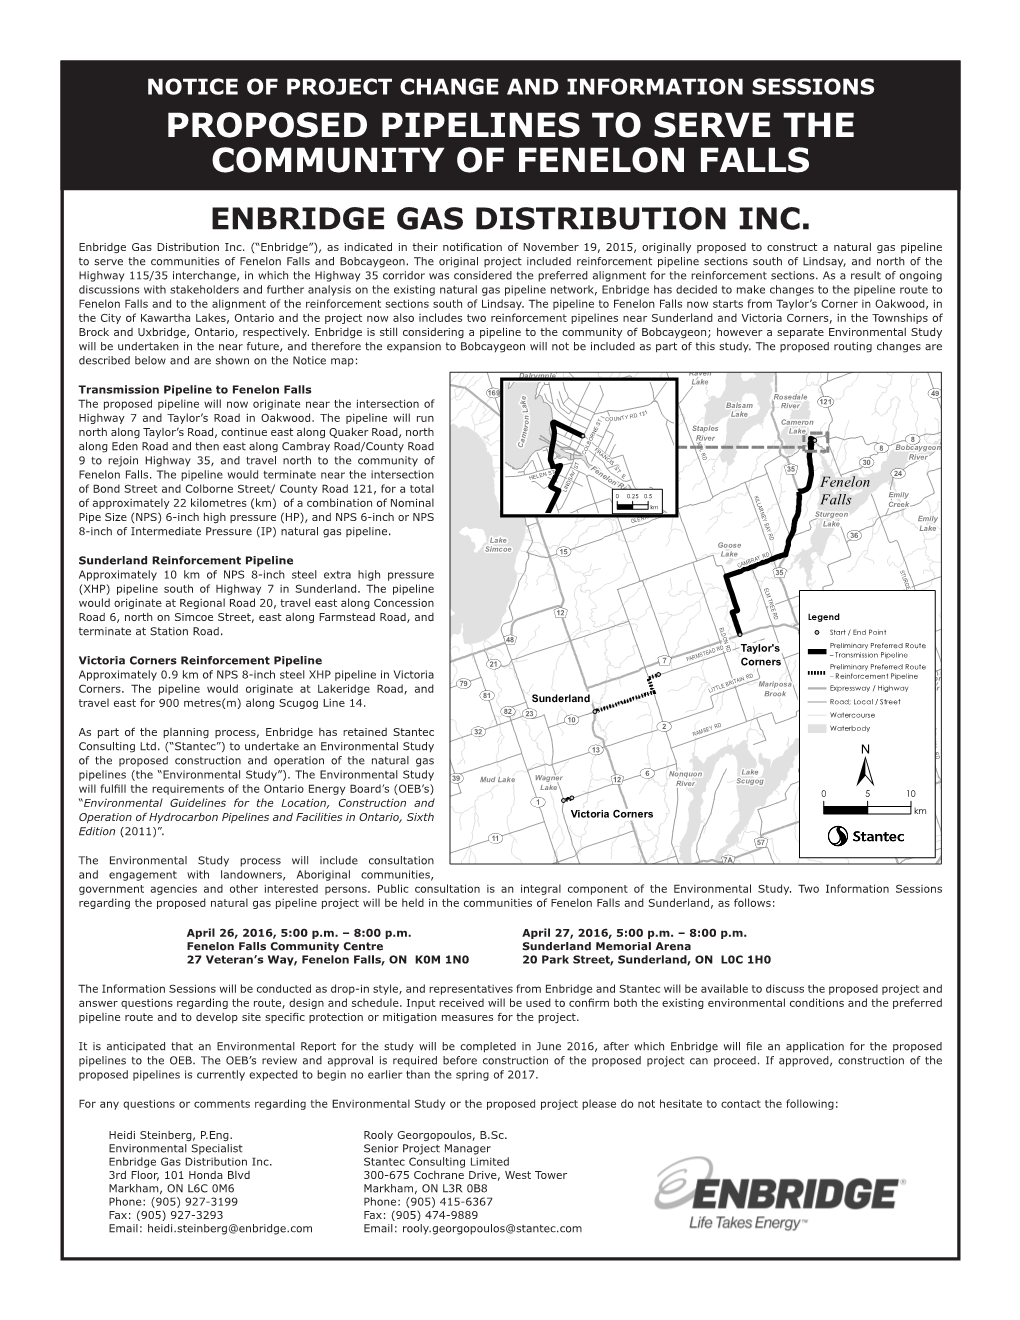 Proposed Pipelines to Serve the Community of Fenelon Falls Enbridge Gas Distribution Inc